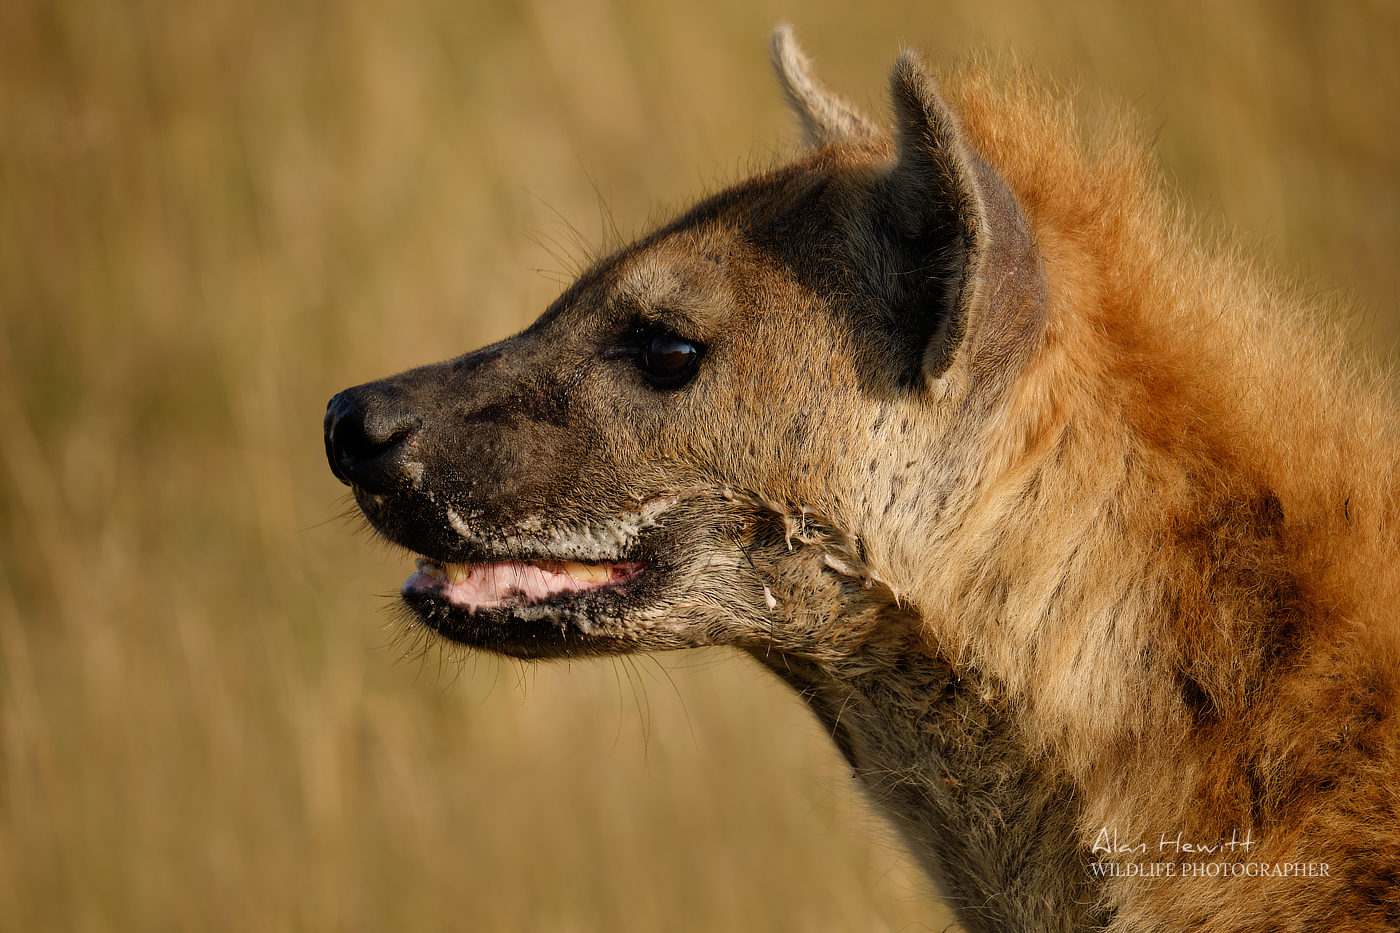 Hyena Alan Hewitt Photography